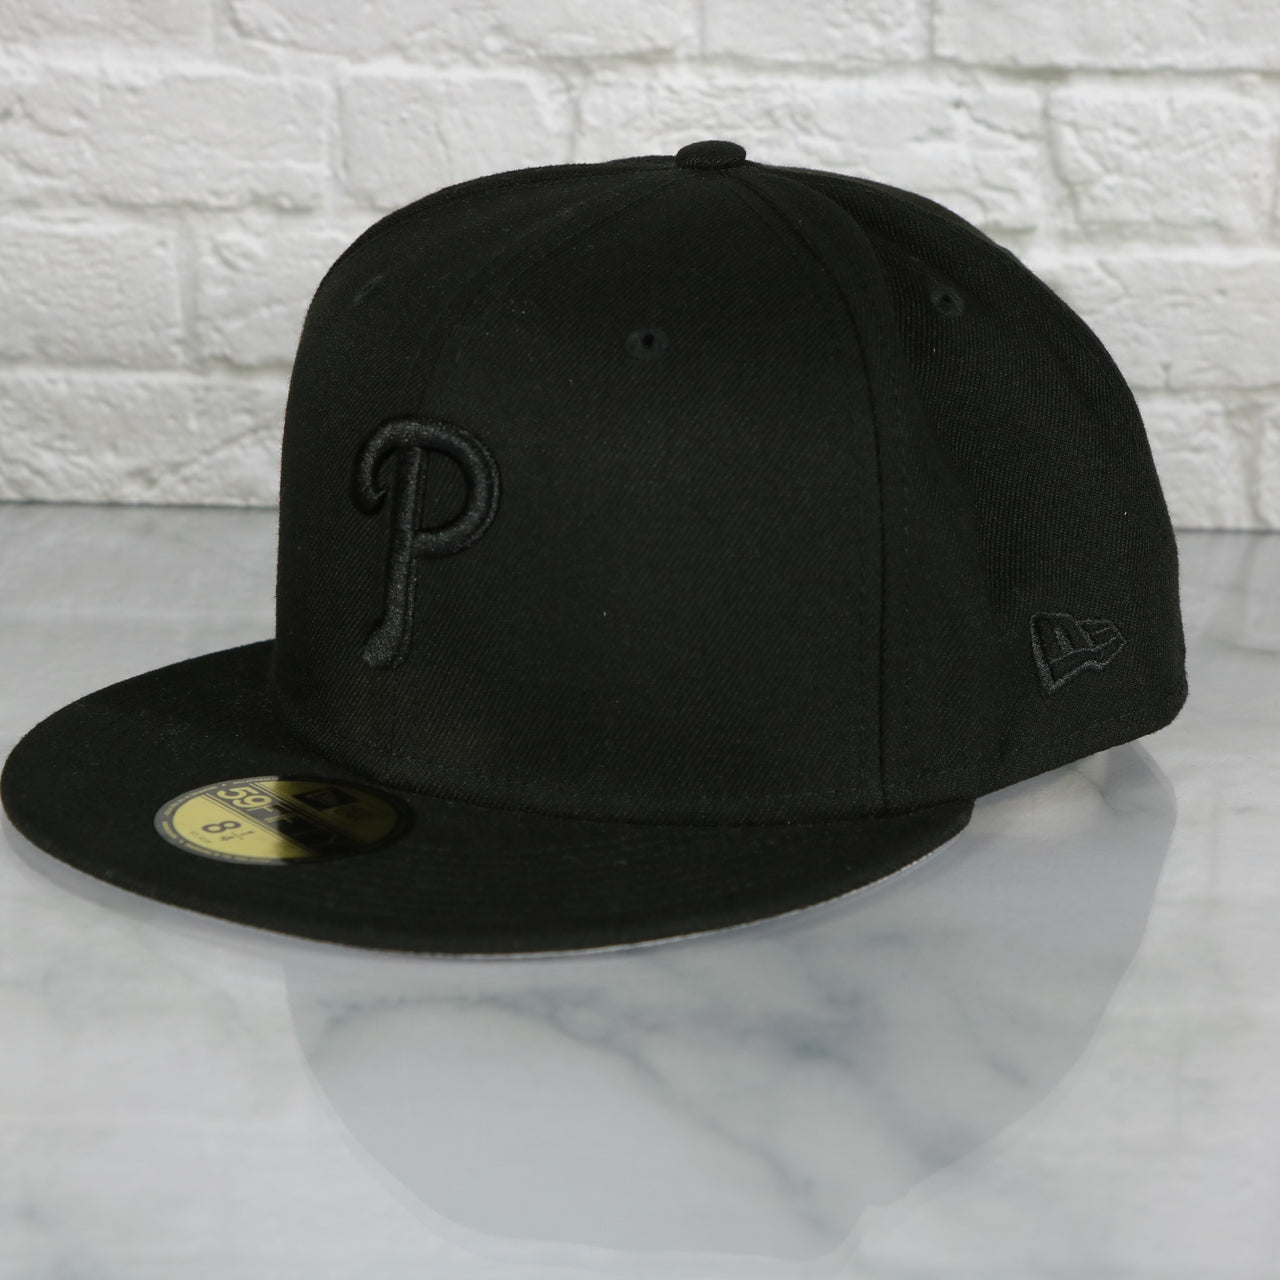 Philadelphia Phillies All Black Fitted Cap | Phillies New Era Black on Black 59fifty | Grey Underbrim All Black 5950